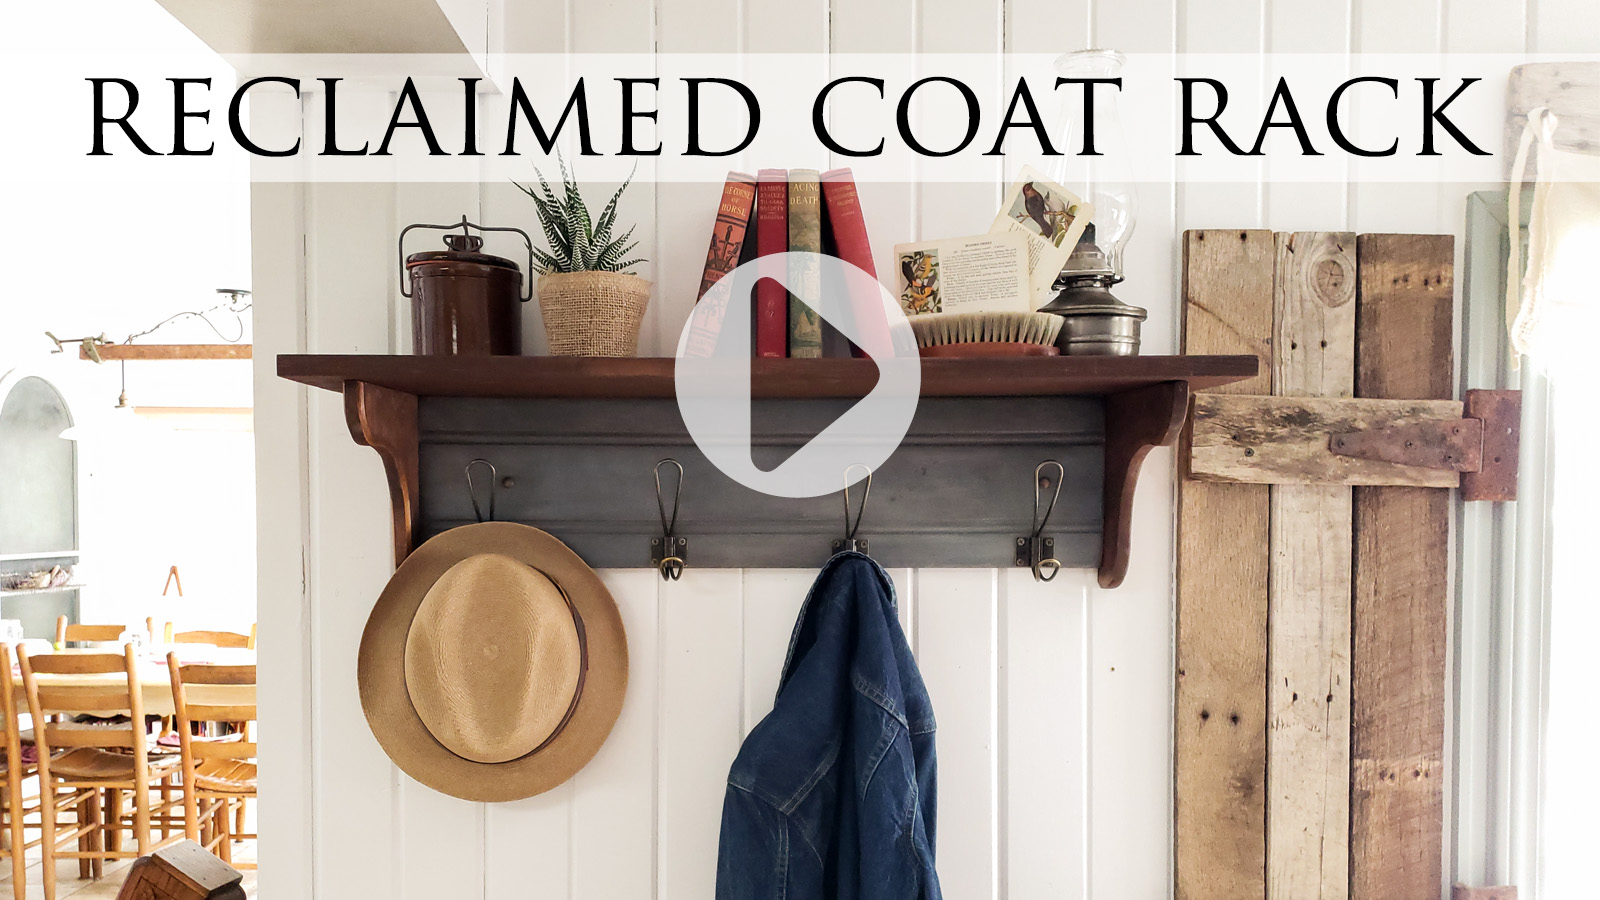 DIY Reclaimed Coat Rack Video Tutorial by Larissa of Prodigal Pieces | prodigalpieces.com